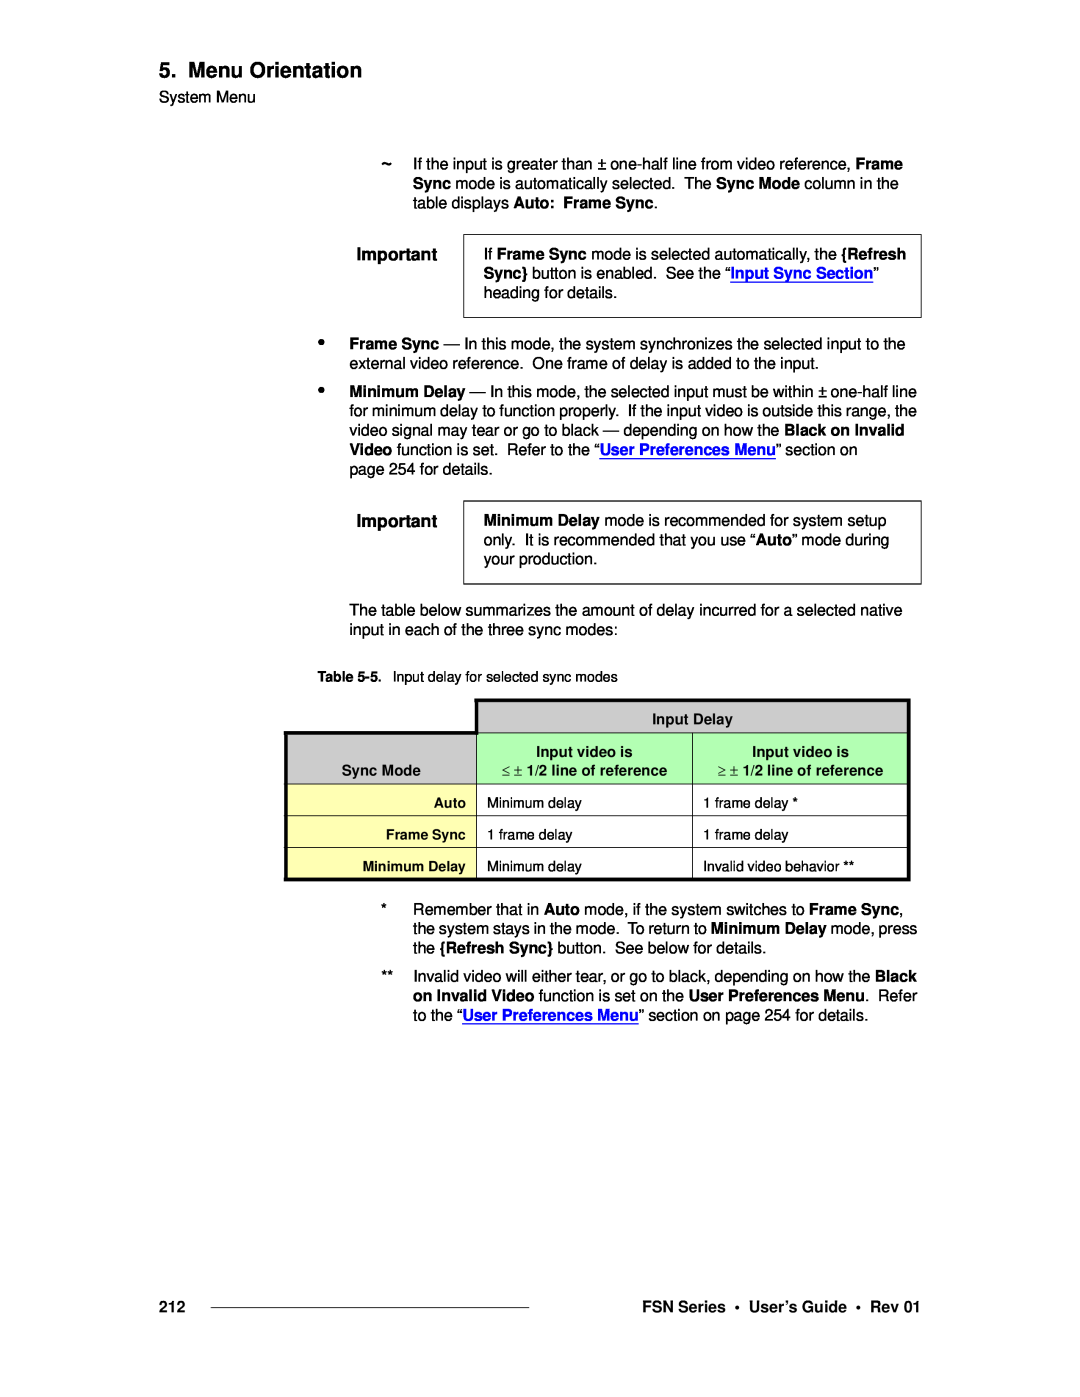 Barco 26-0702000-00 manual Menu Orientation, System Menu, FSN Series • User’s Guide • Rev 